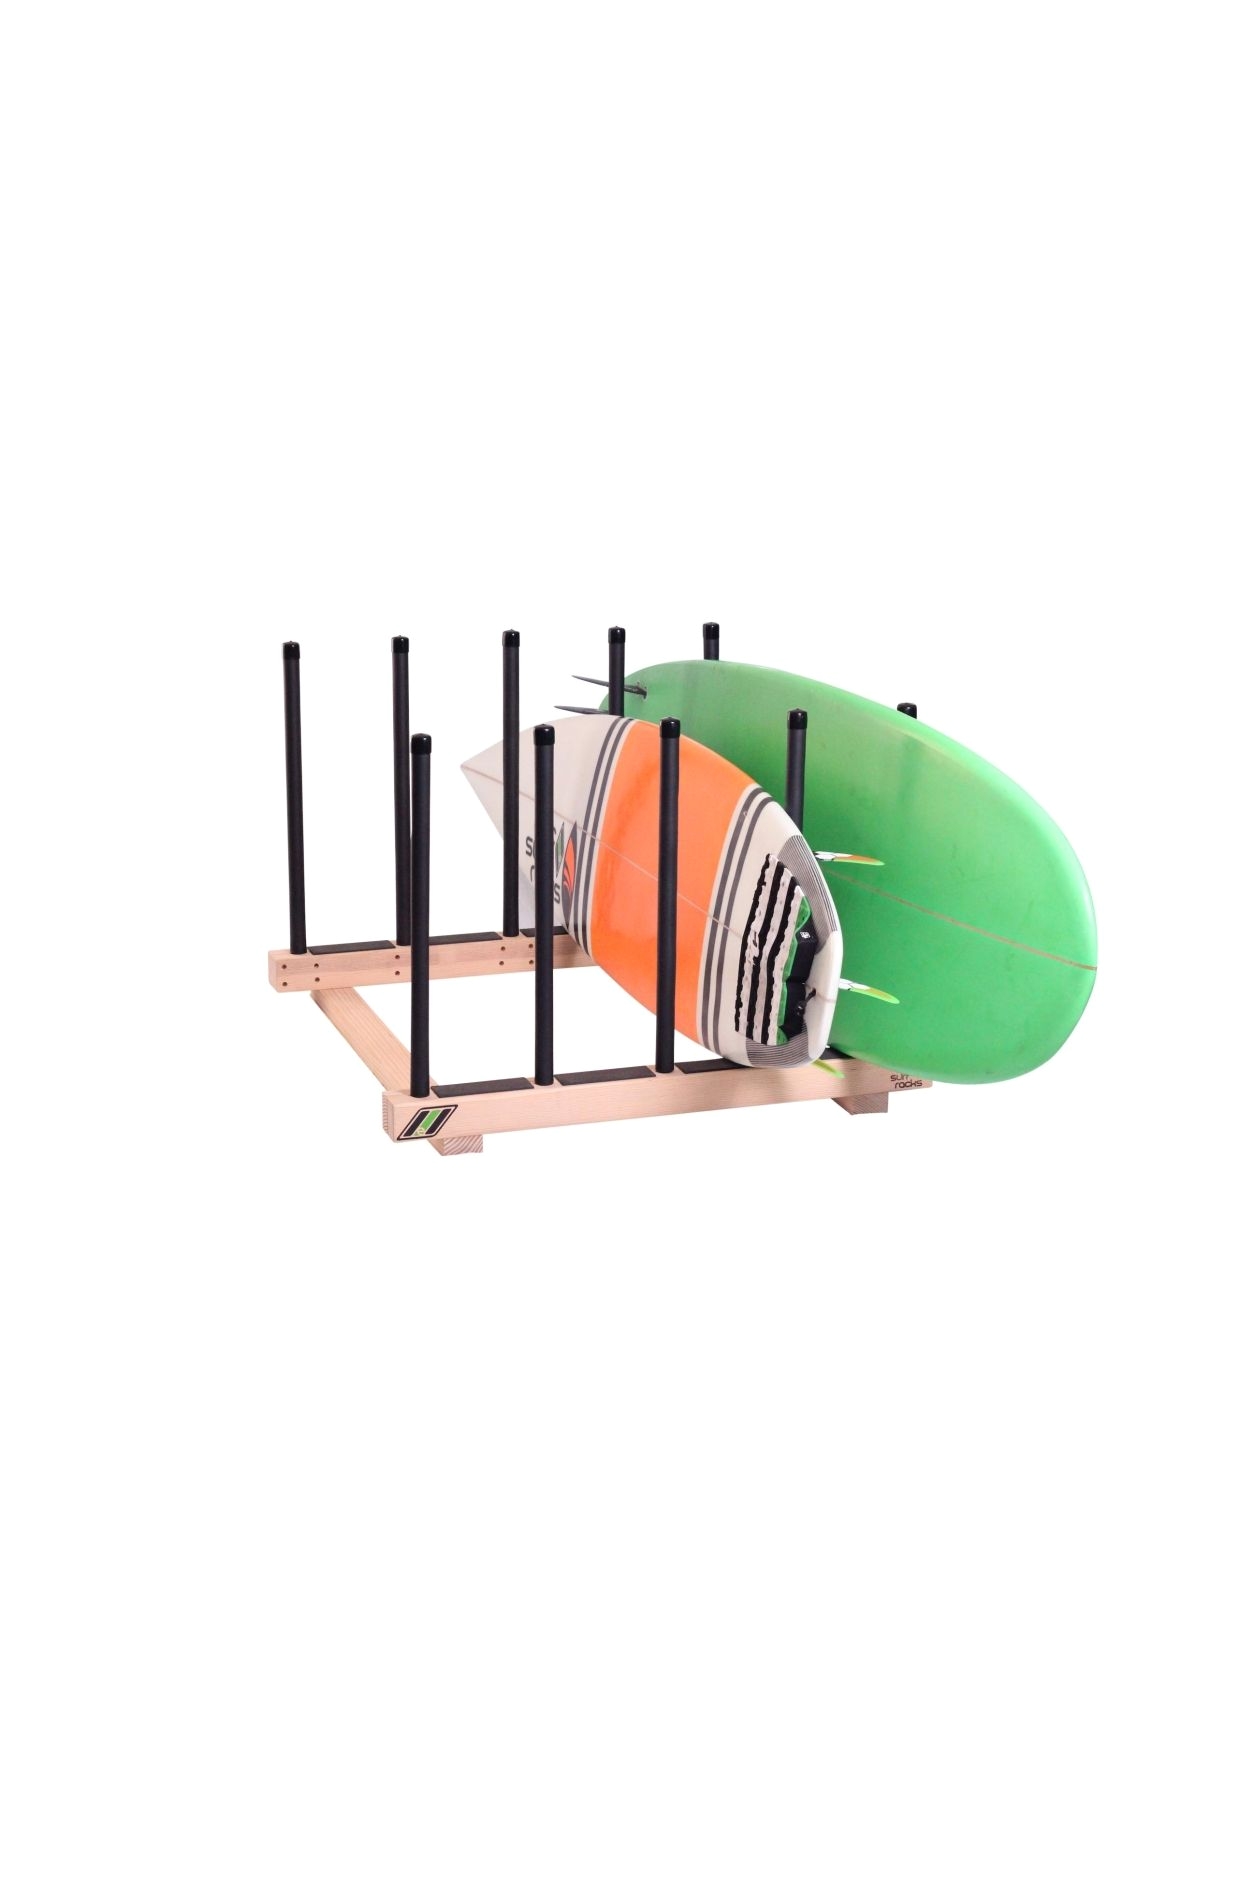 the pig dog surfboard sup floor rack